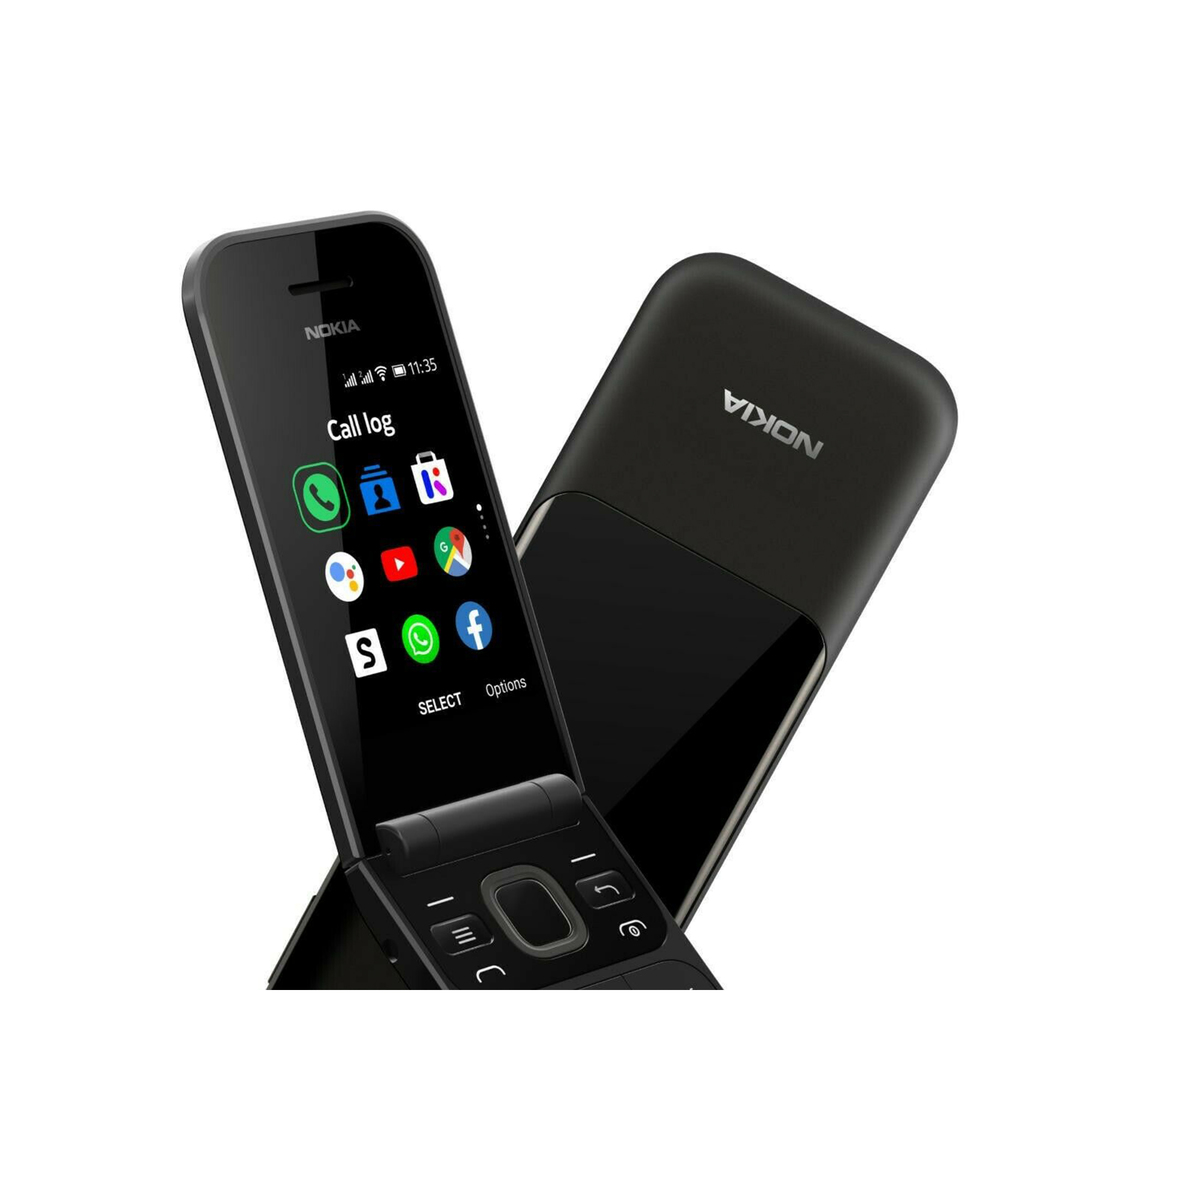 Nokia 2720 Flip Dual Sim TA-1170 4GB 4G LTE Black